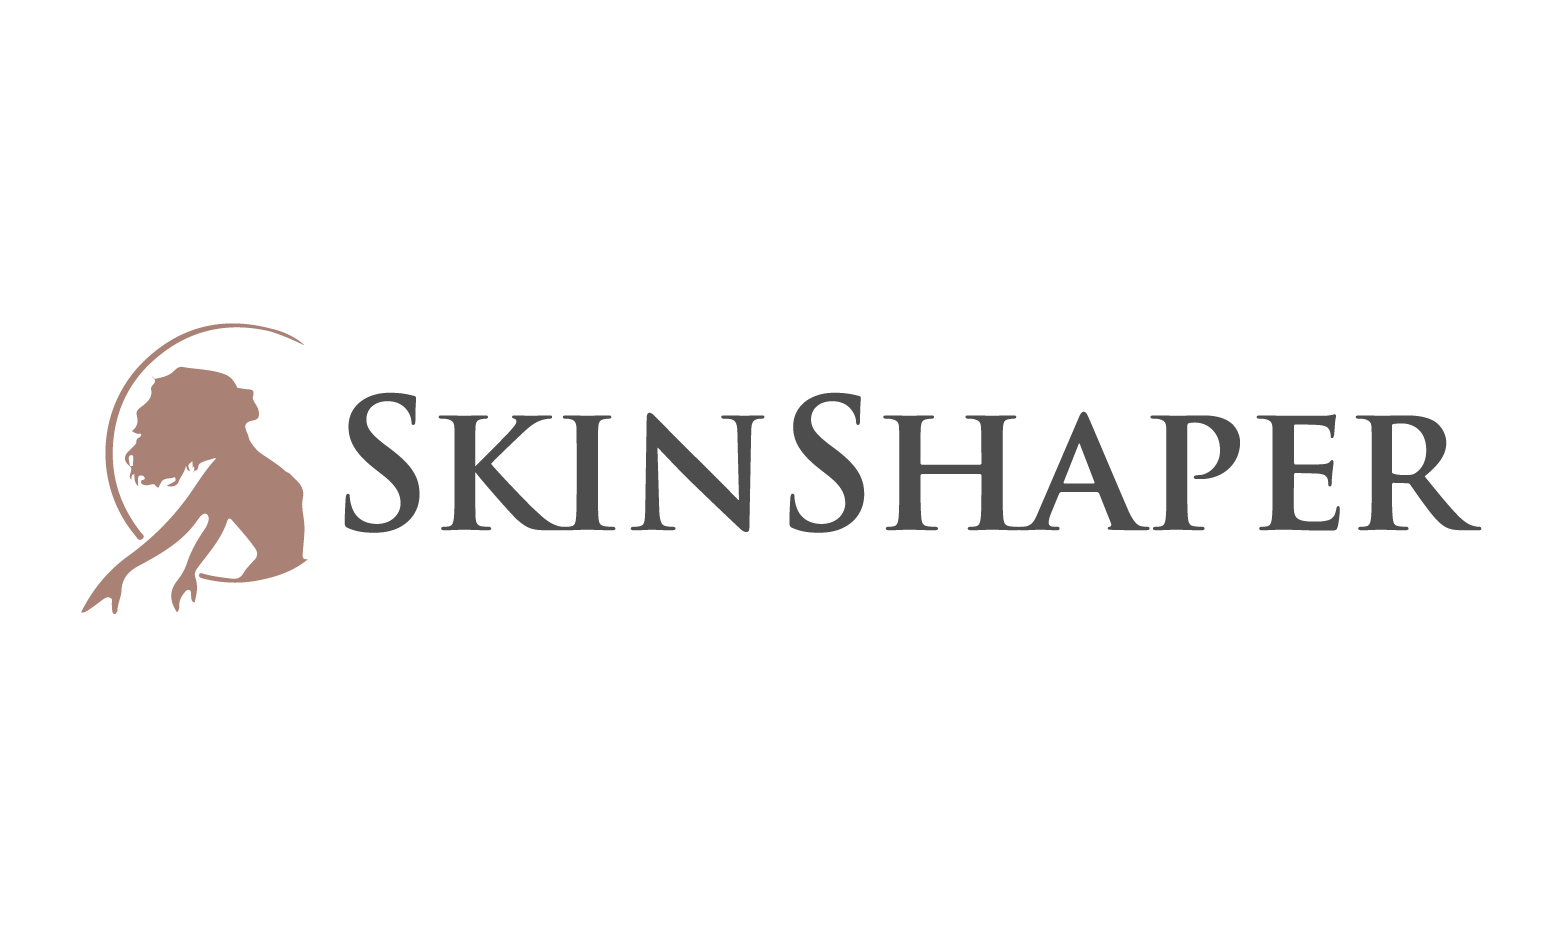 SkinShaper.com - Creative brandable domain for sale